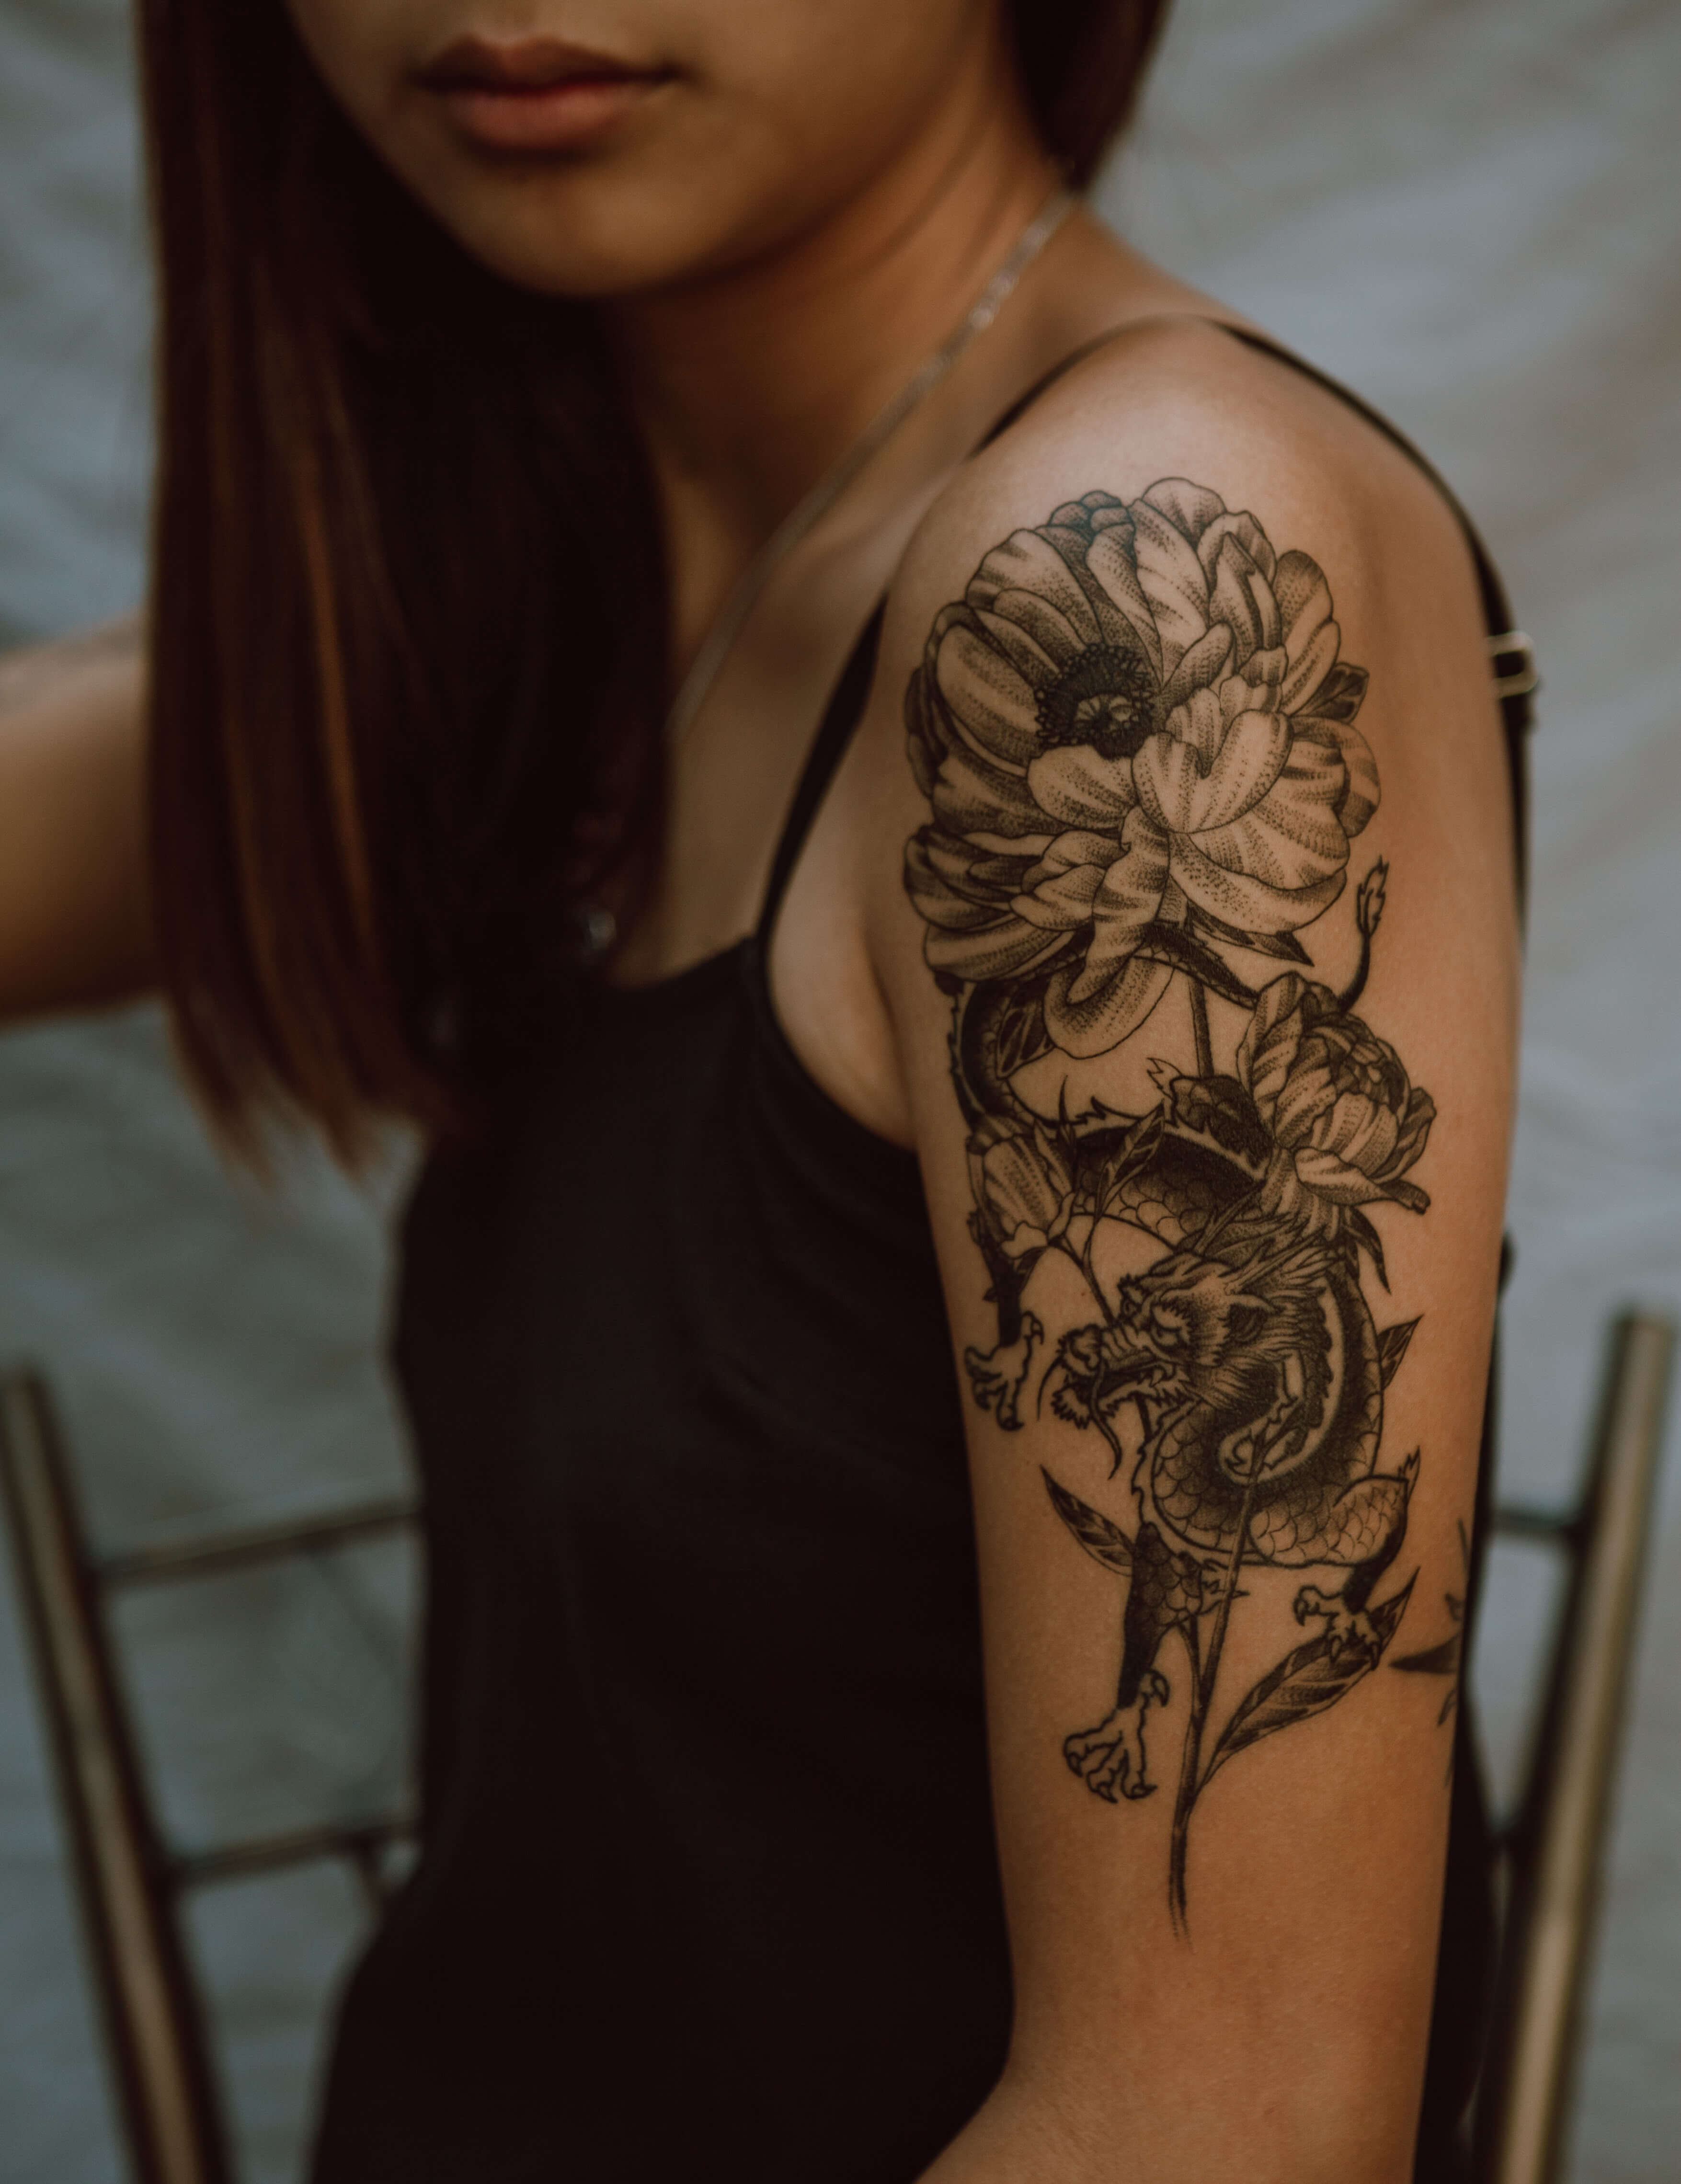 Tattoo design of flowers